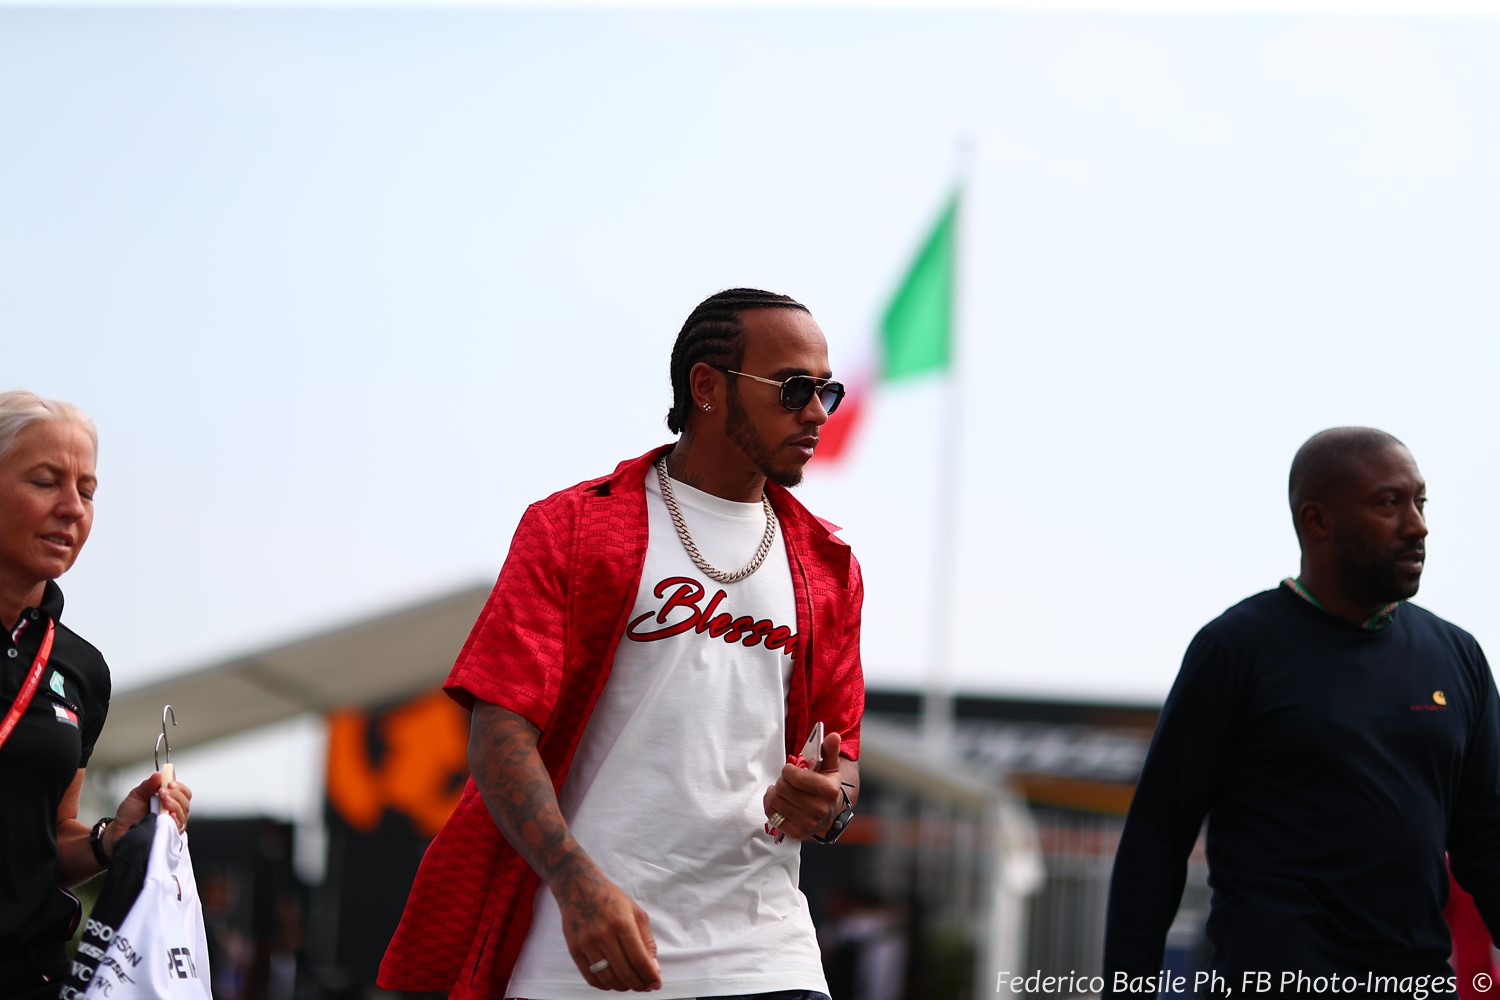 Hamilton in Monza